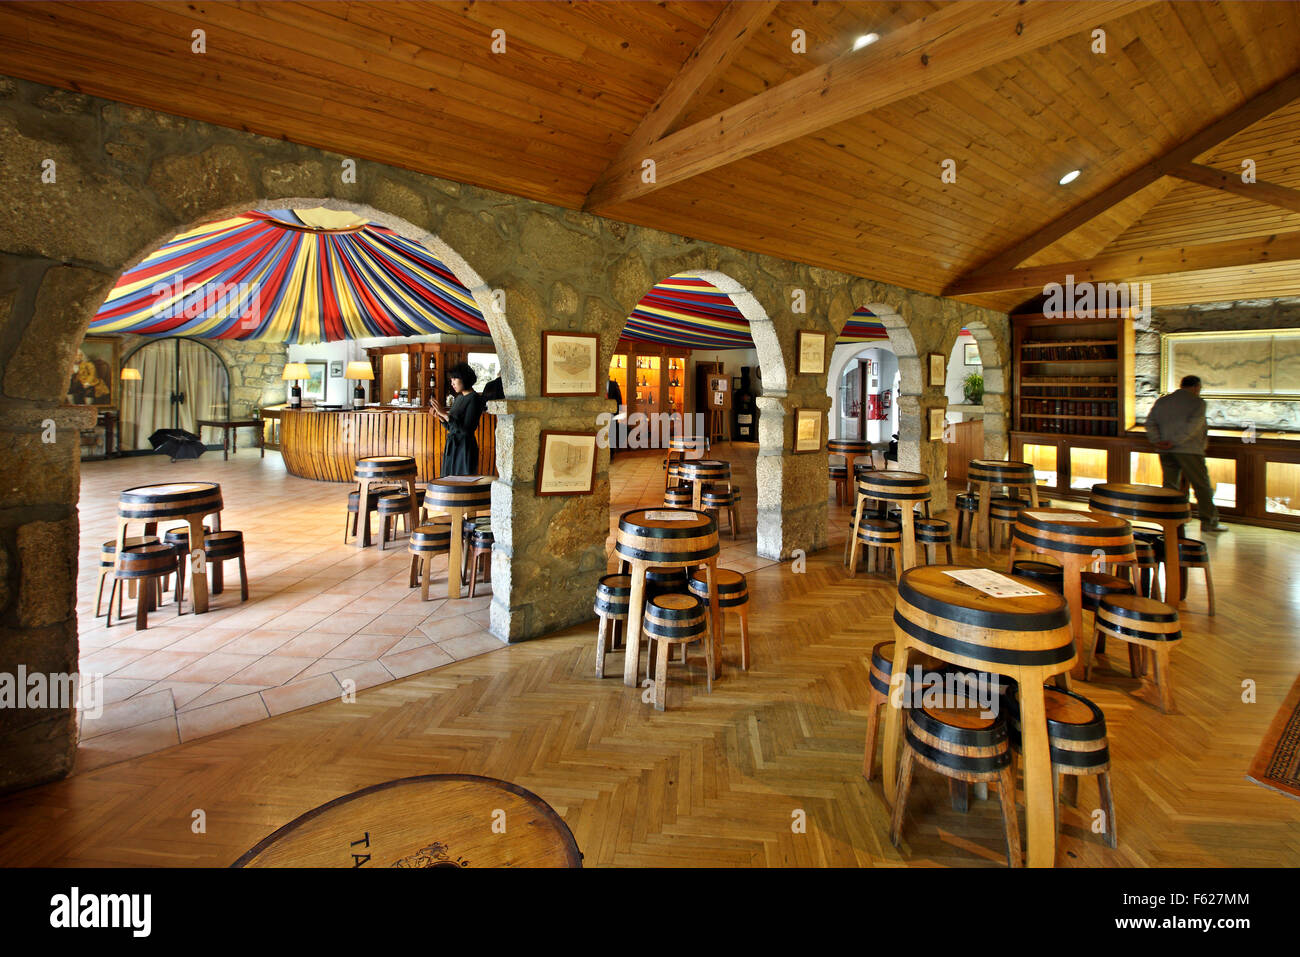 Las salas de cata de vinos "Taylor's' en Villa Nova de Gaia, Porto, Porte e Norte, Portugal. Foto de stock